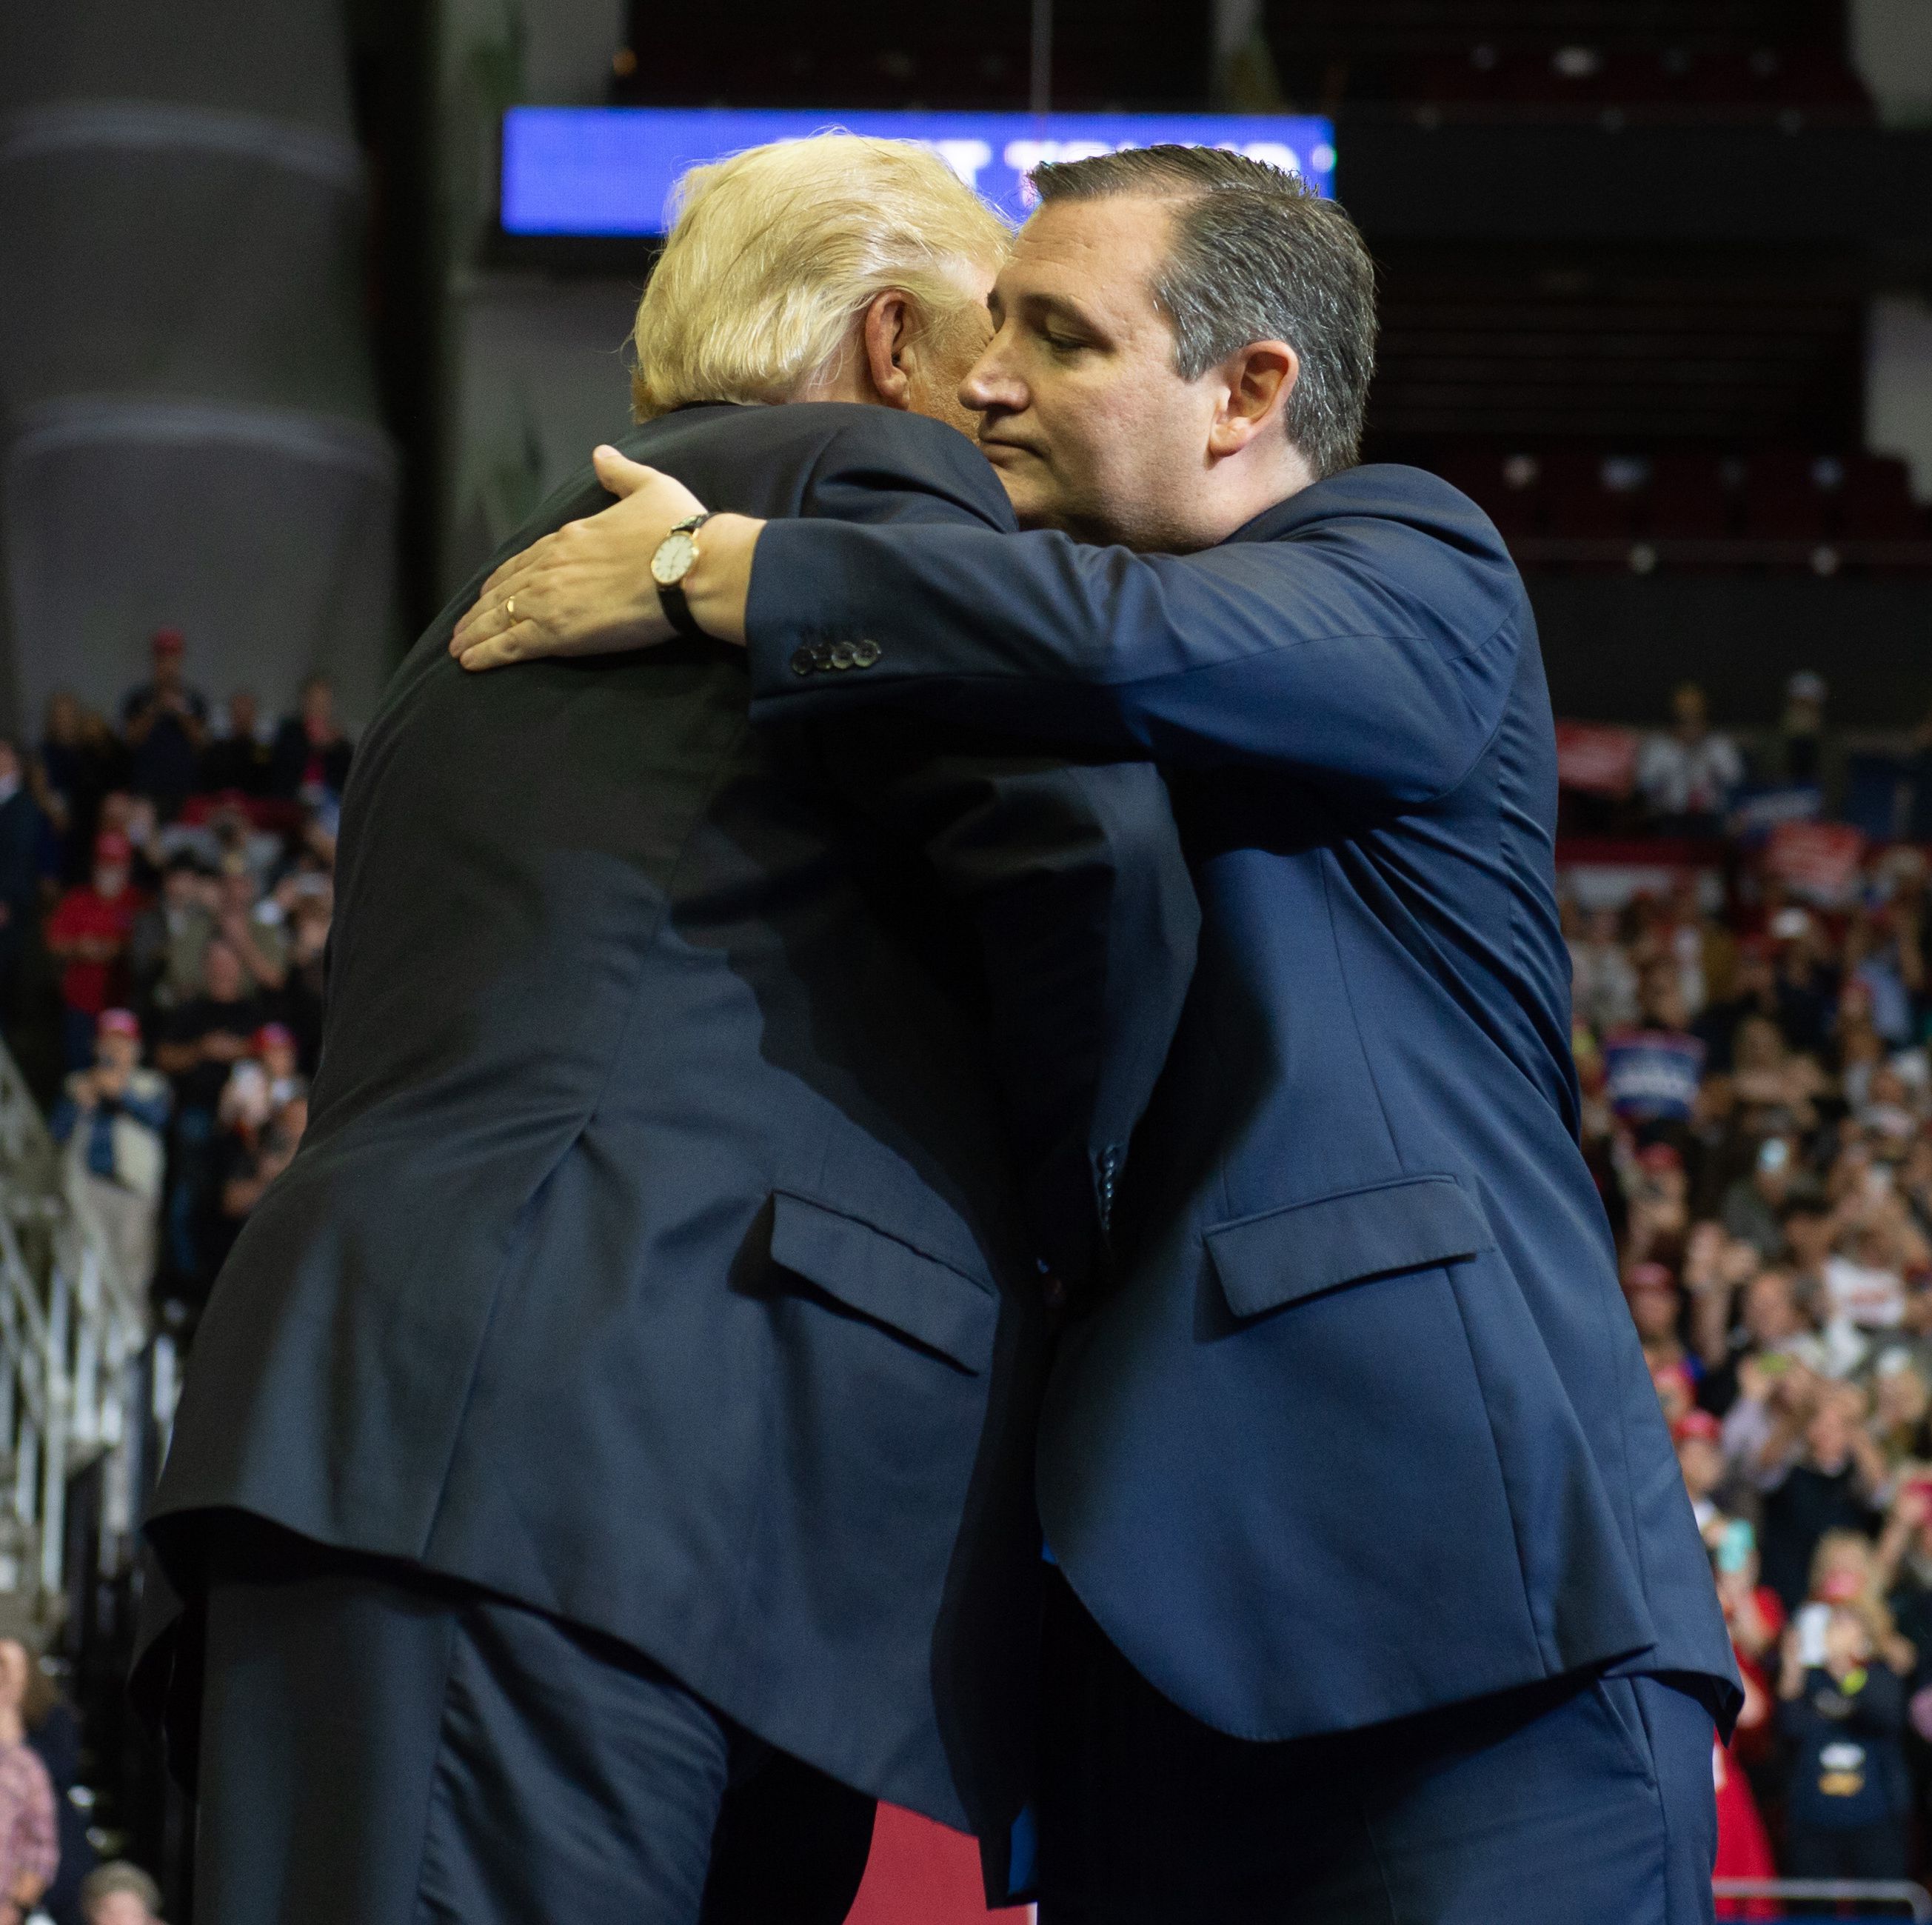 Trump And Cruz Make Houston Crowd Antsy